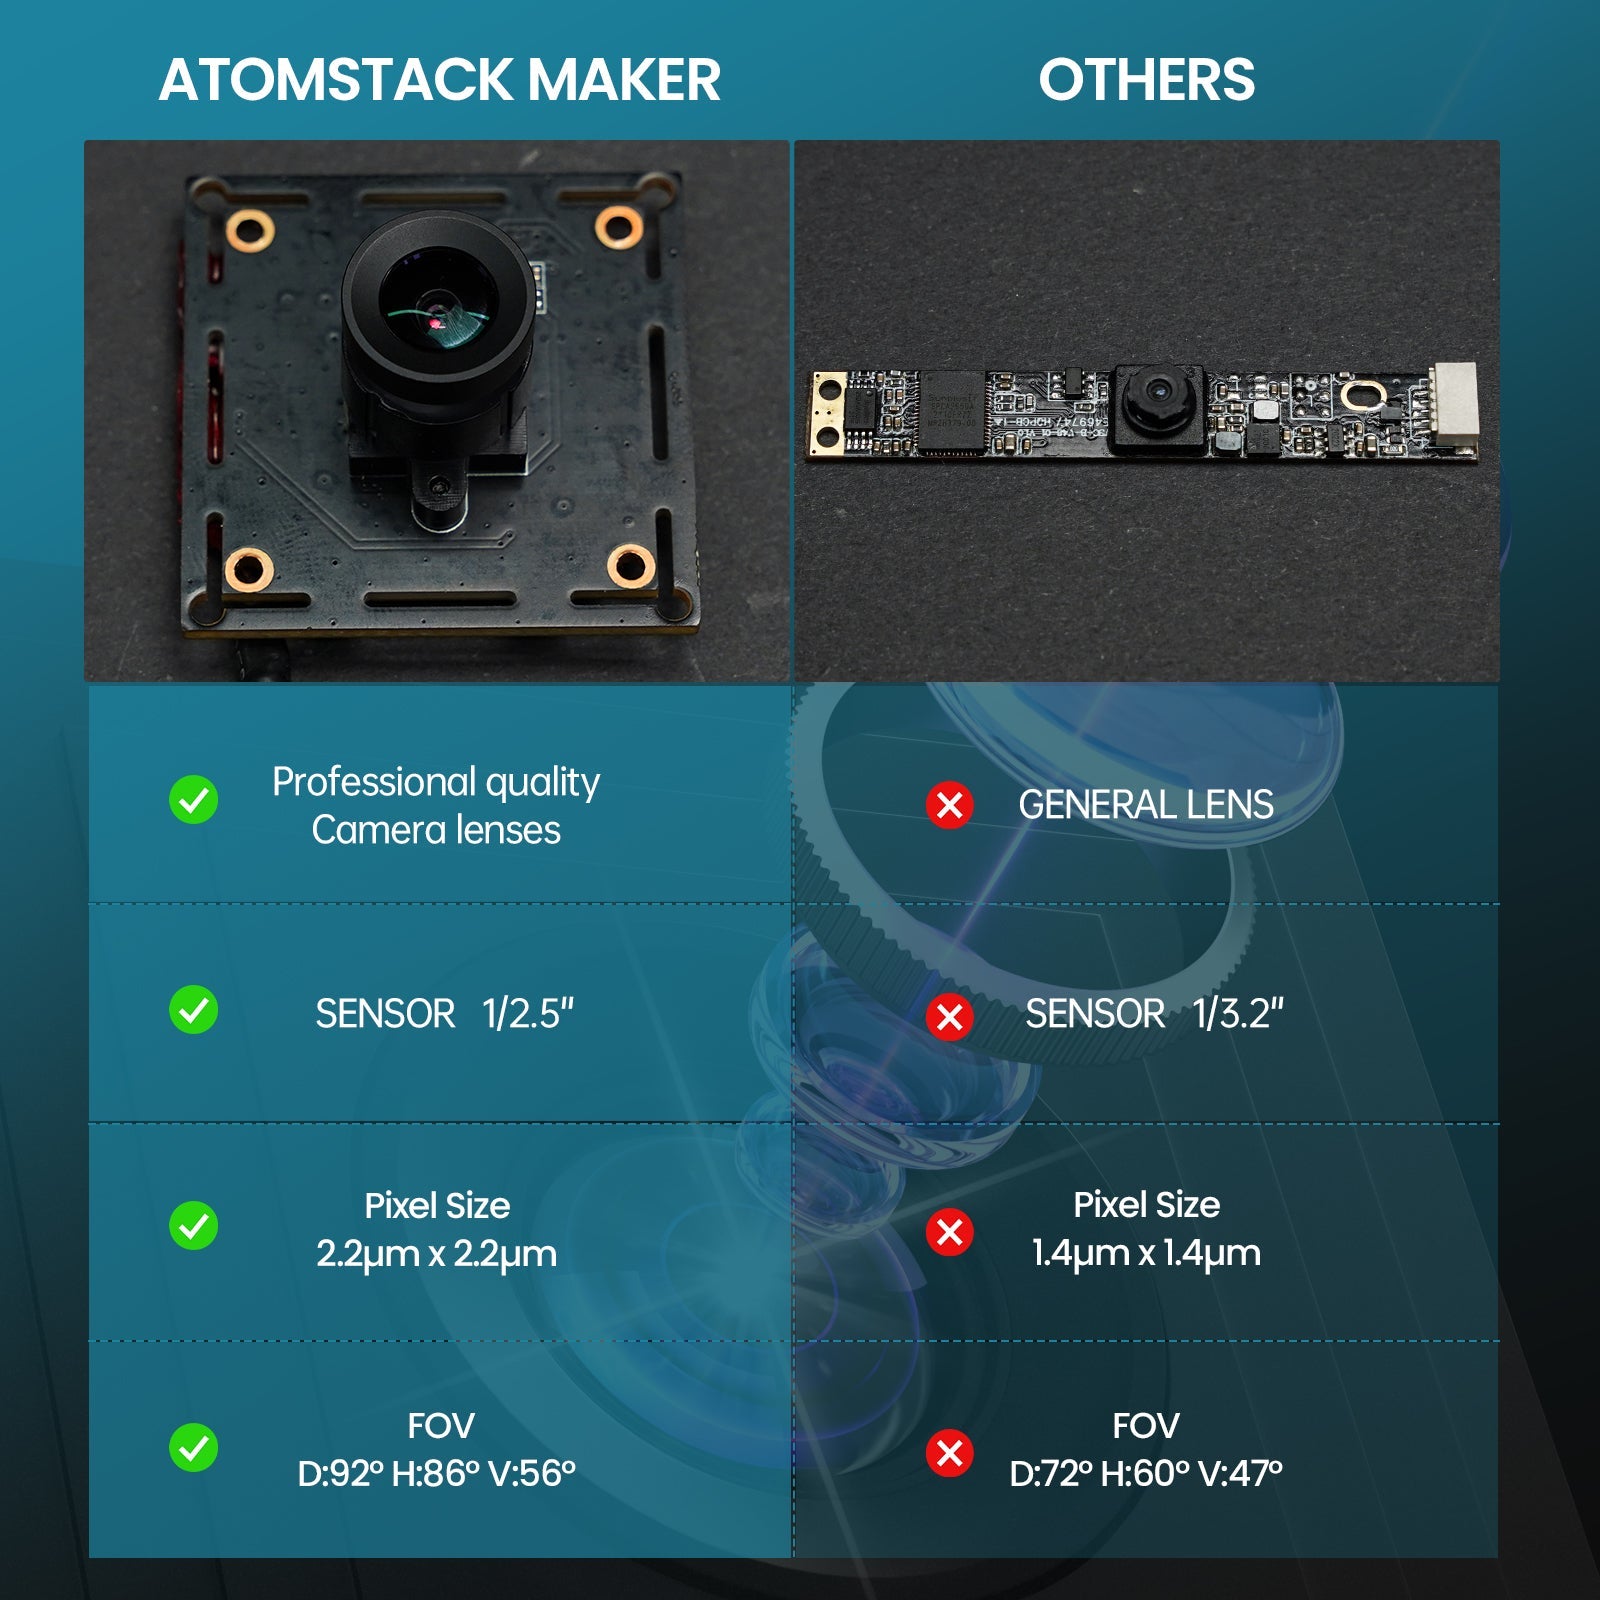 AtomStack AC1 LightBurn Camera For Laser Engraver and Cutter - Precise Positioning